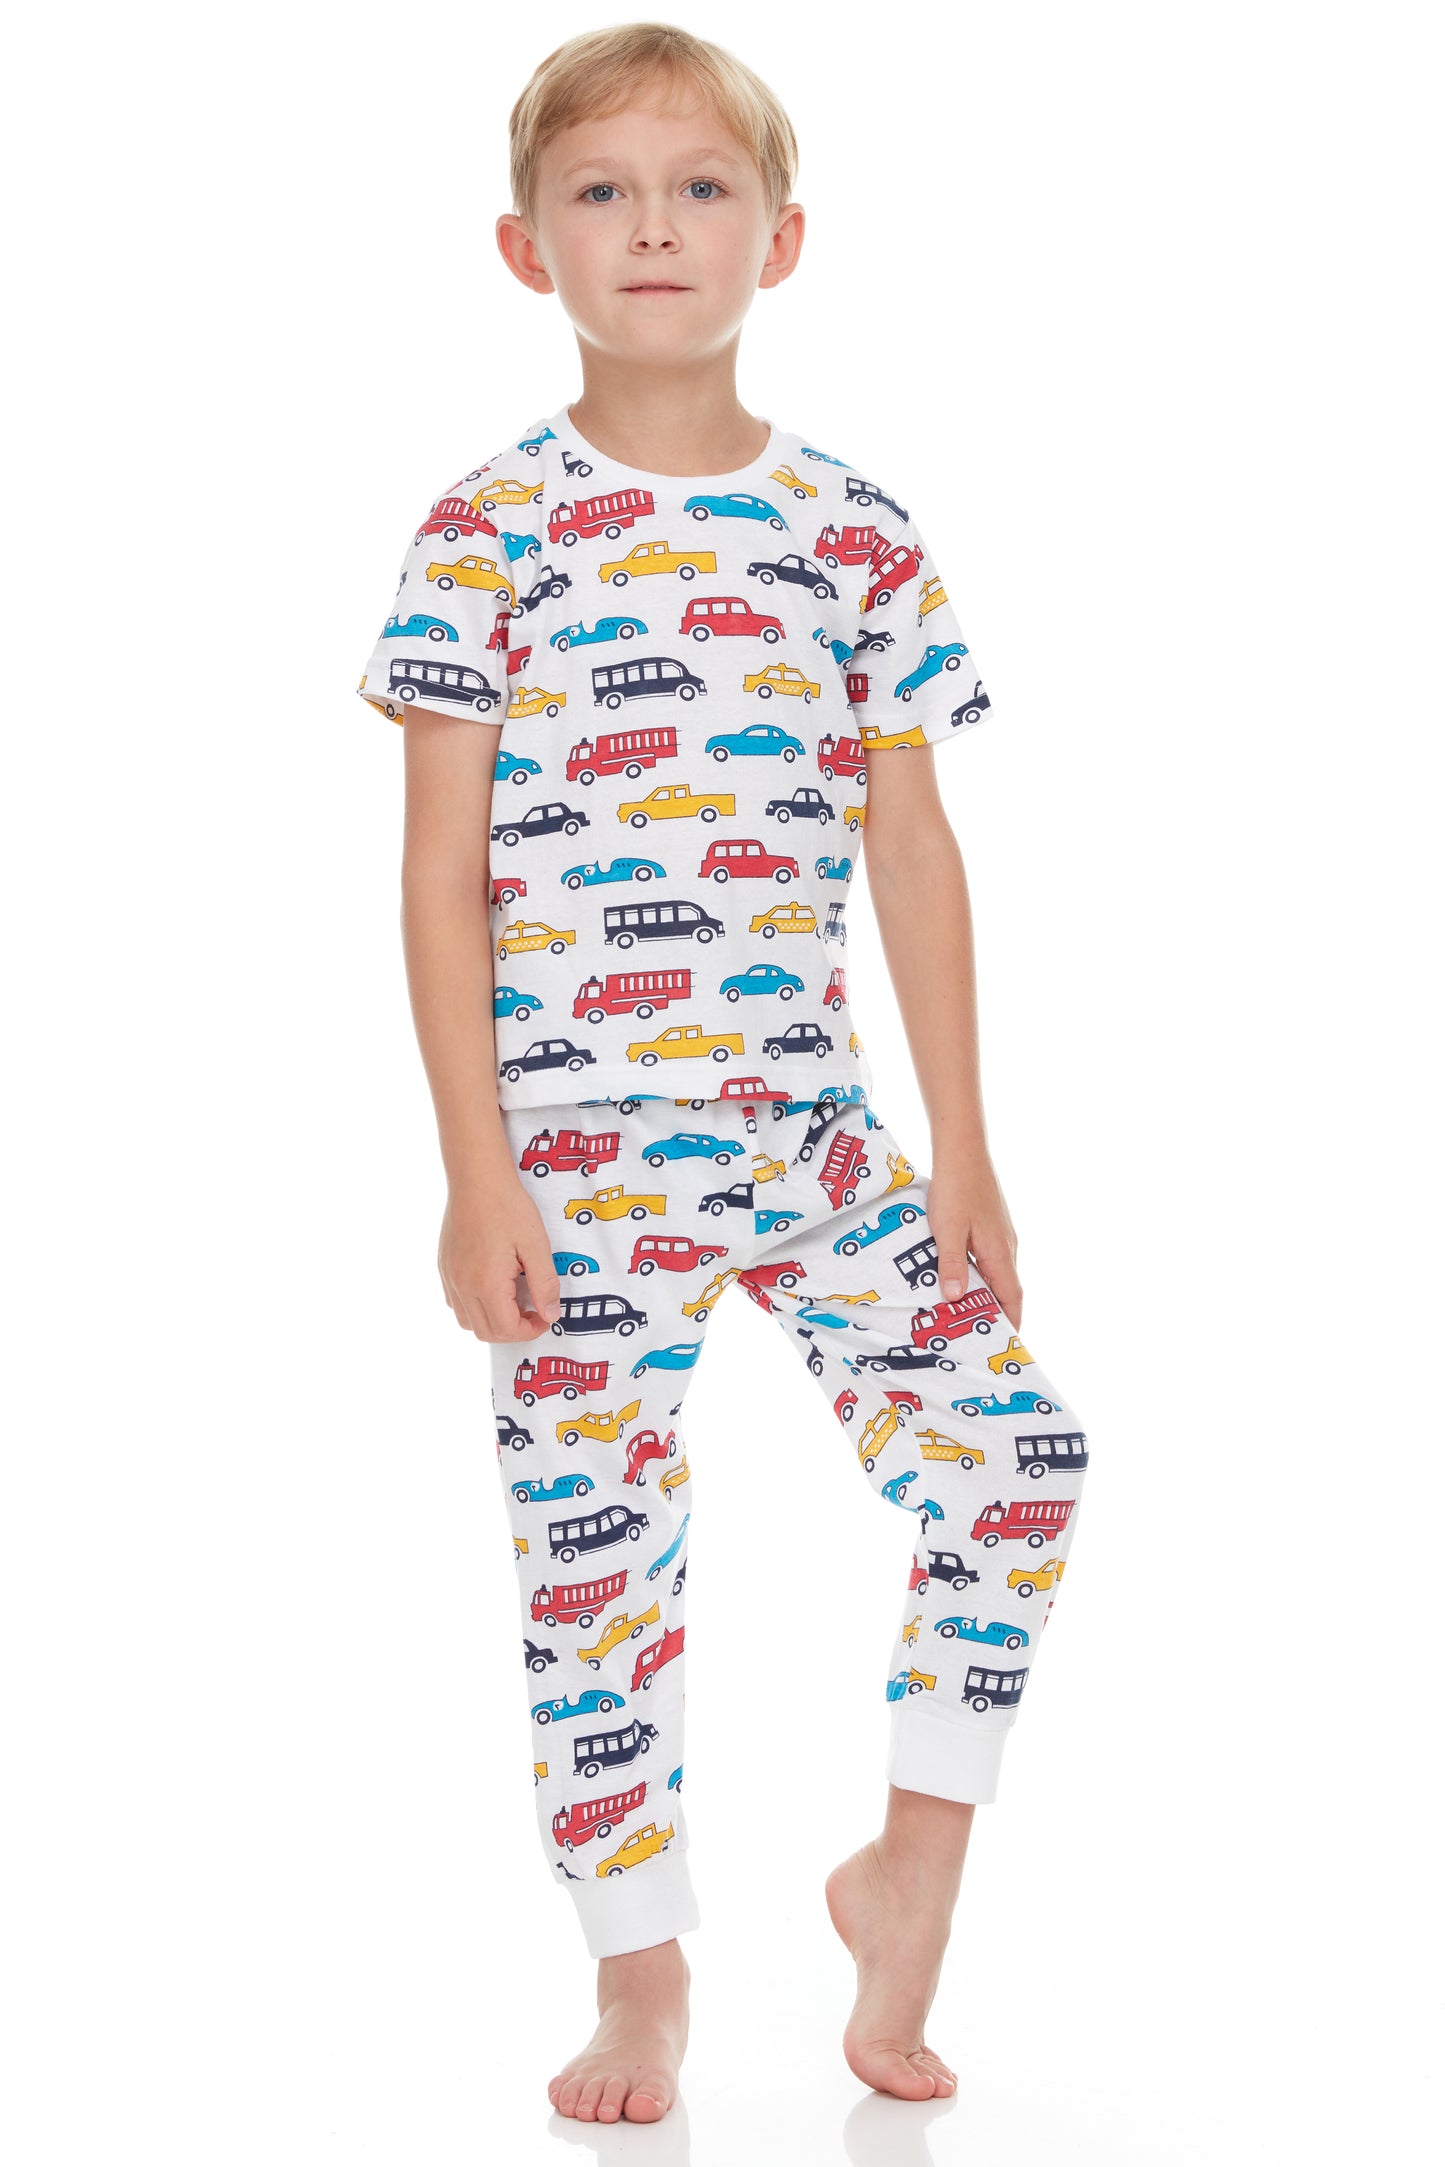 Cars Shorts Pajamas For Kids Super Soft - 2 Piece Set